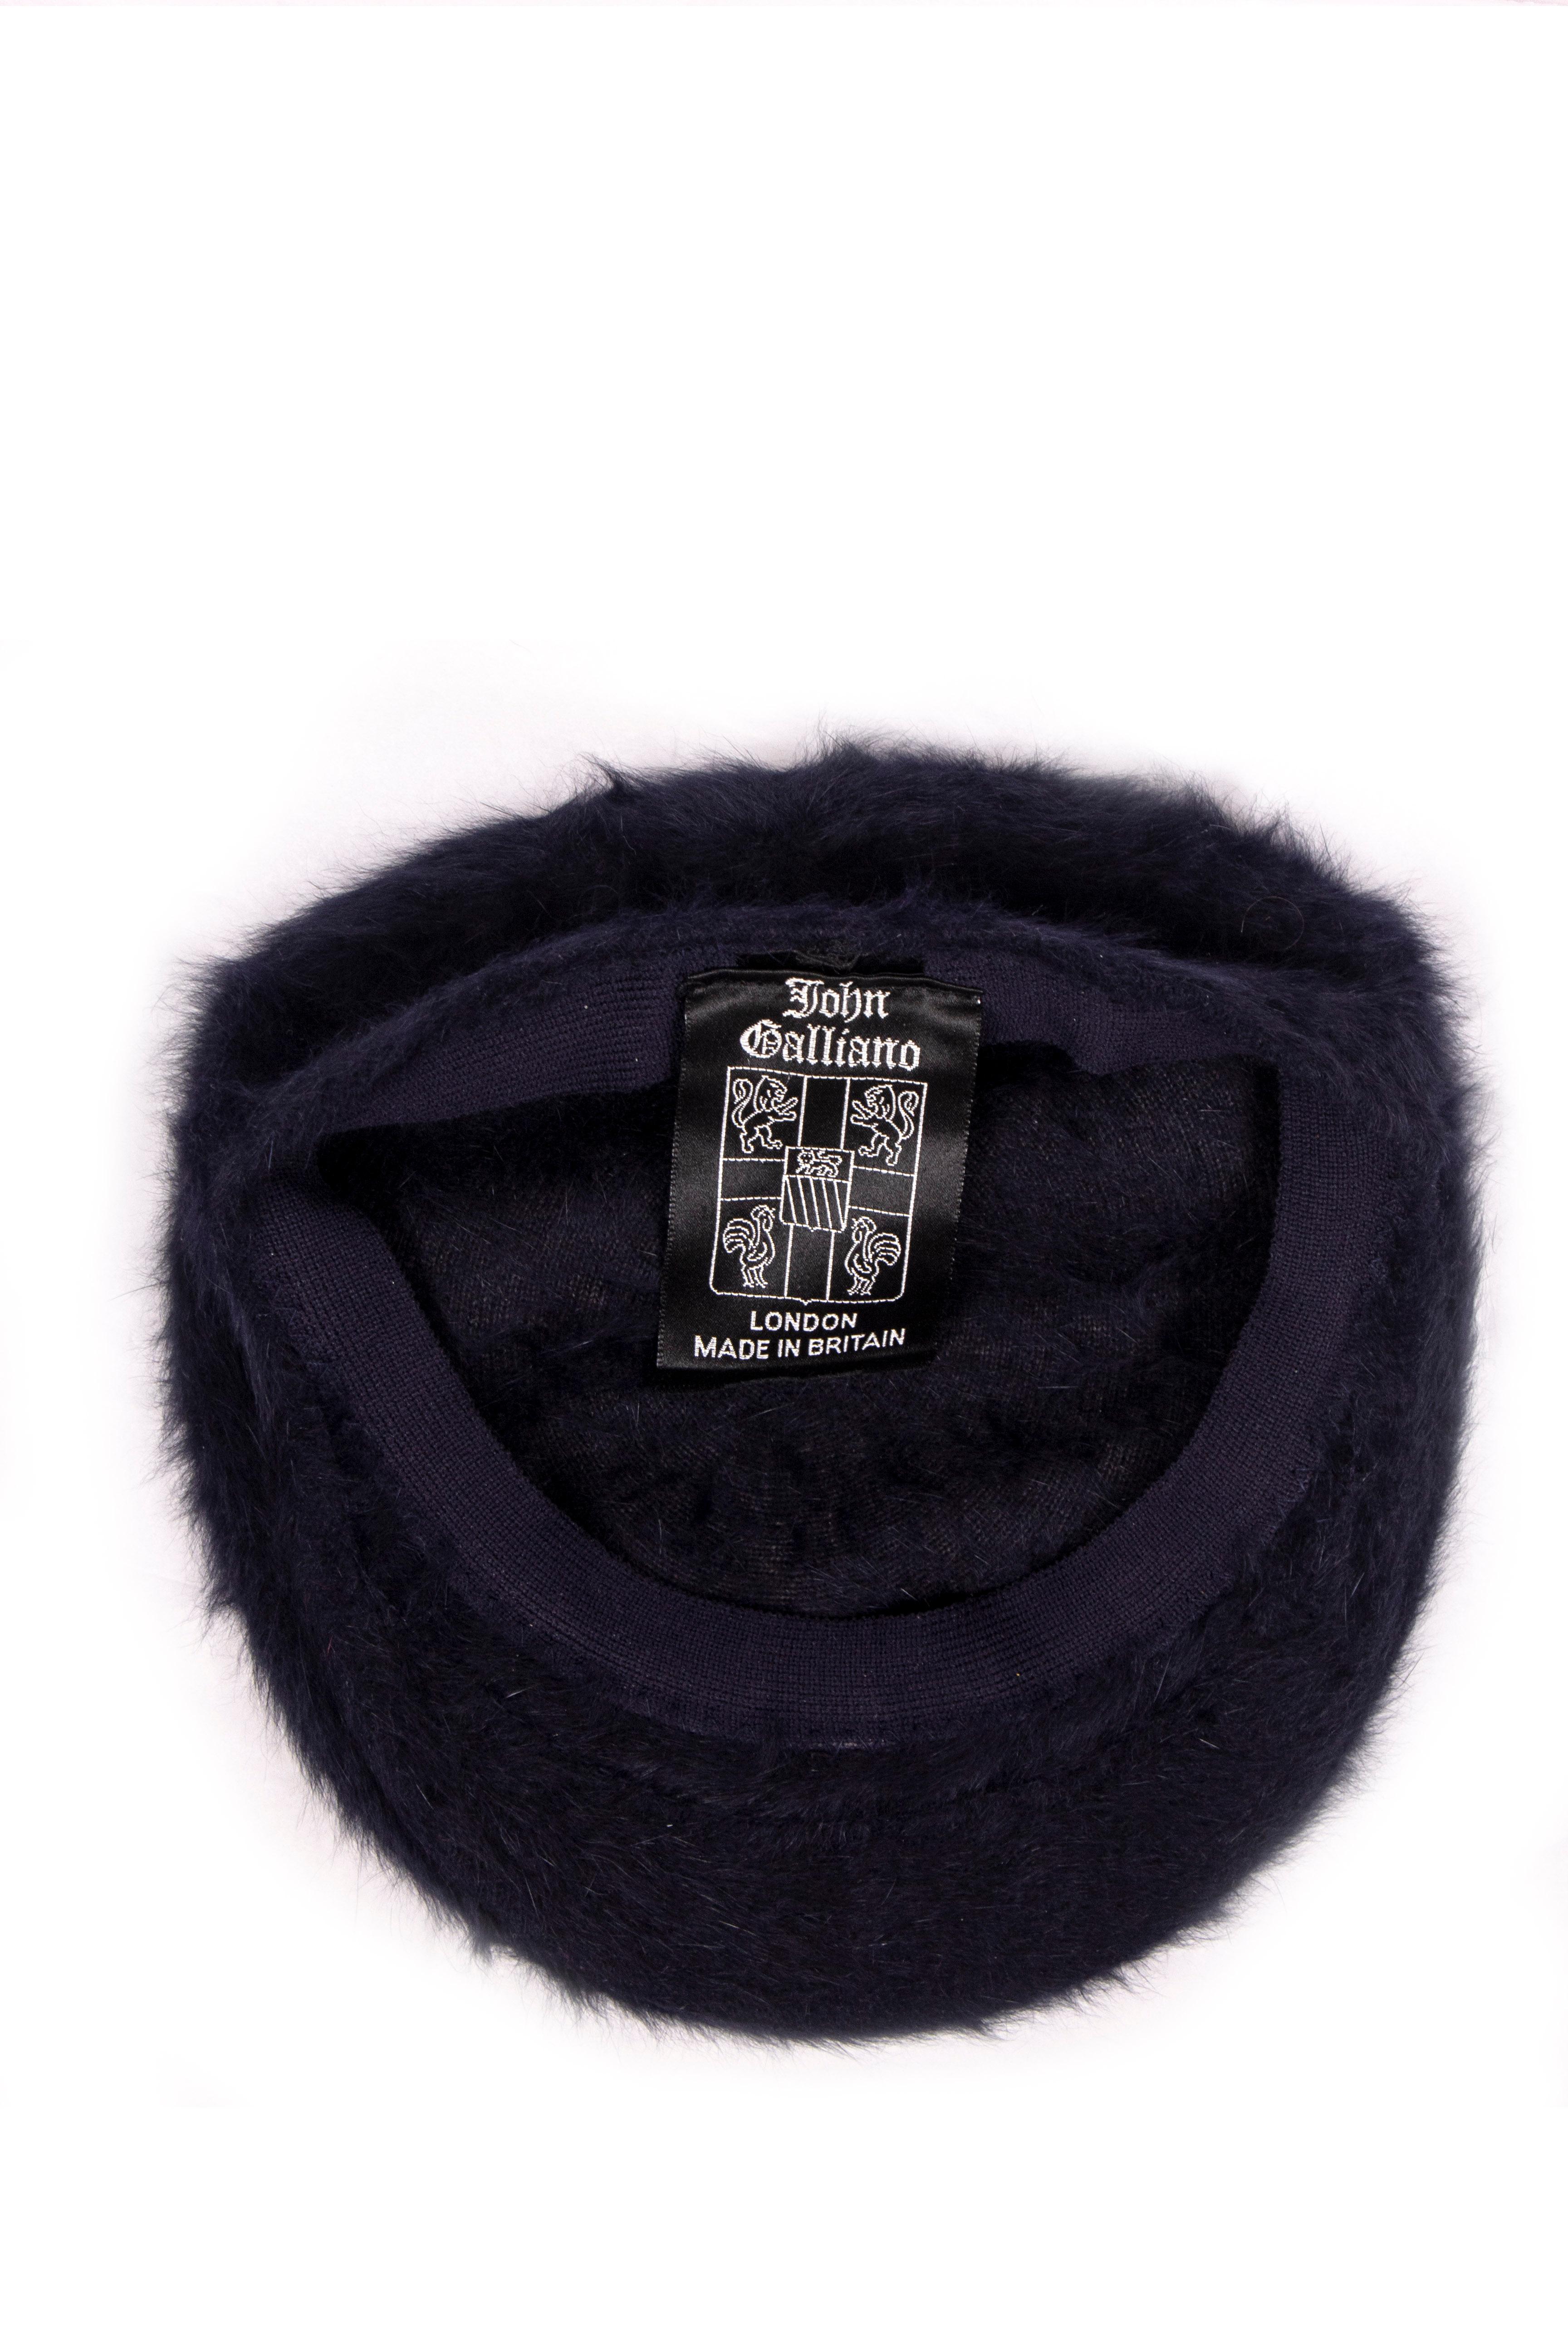 John Galliano navy angora beret hat, fw 1989 For Sale 1